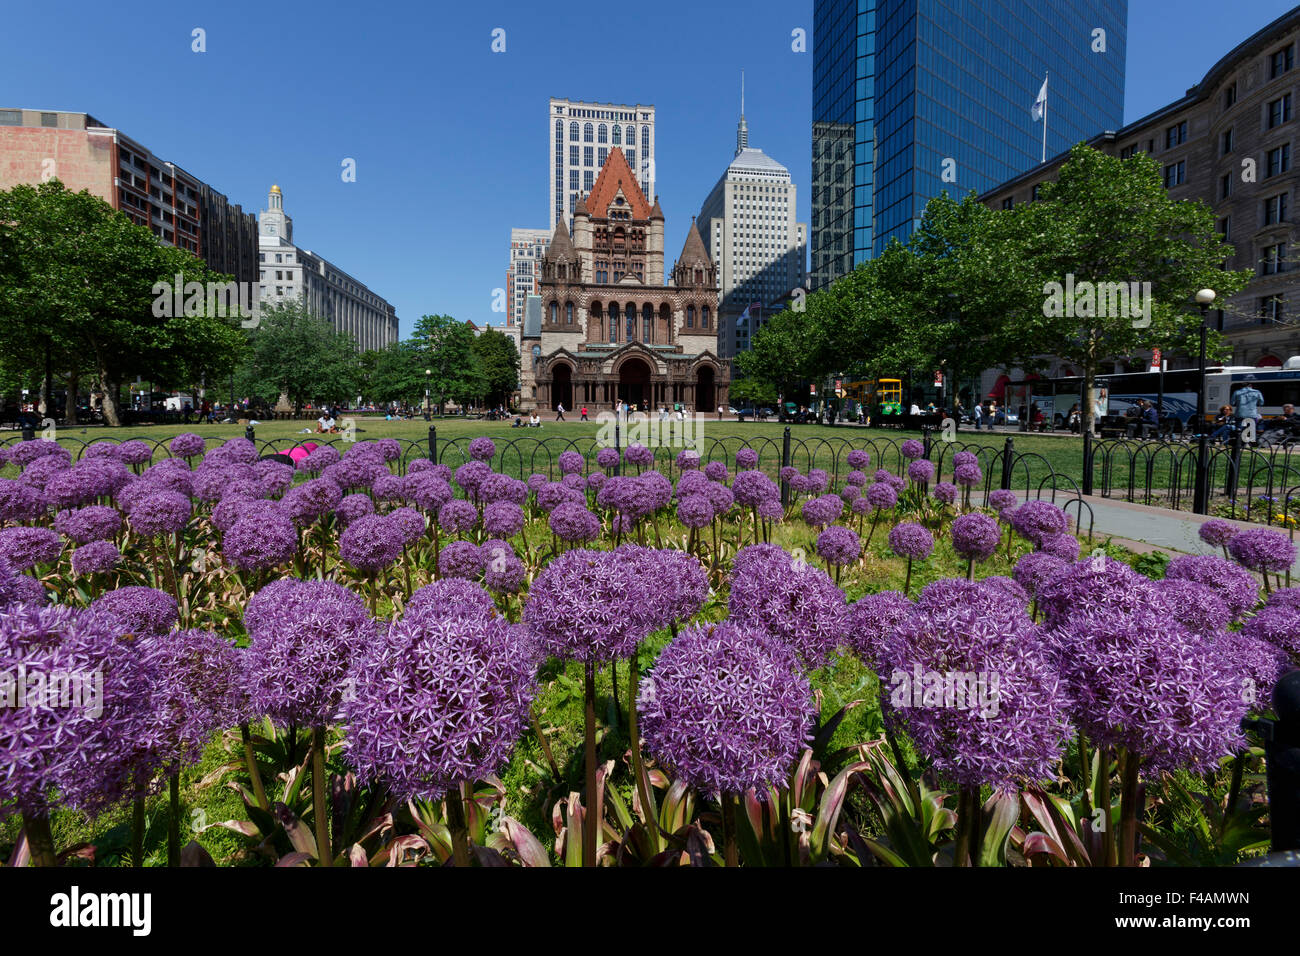 Die Trinity Church im Copley Square in Boston über riesige Allium Blumenbeet Stockfoto